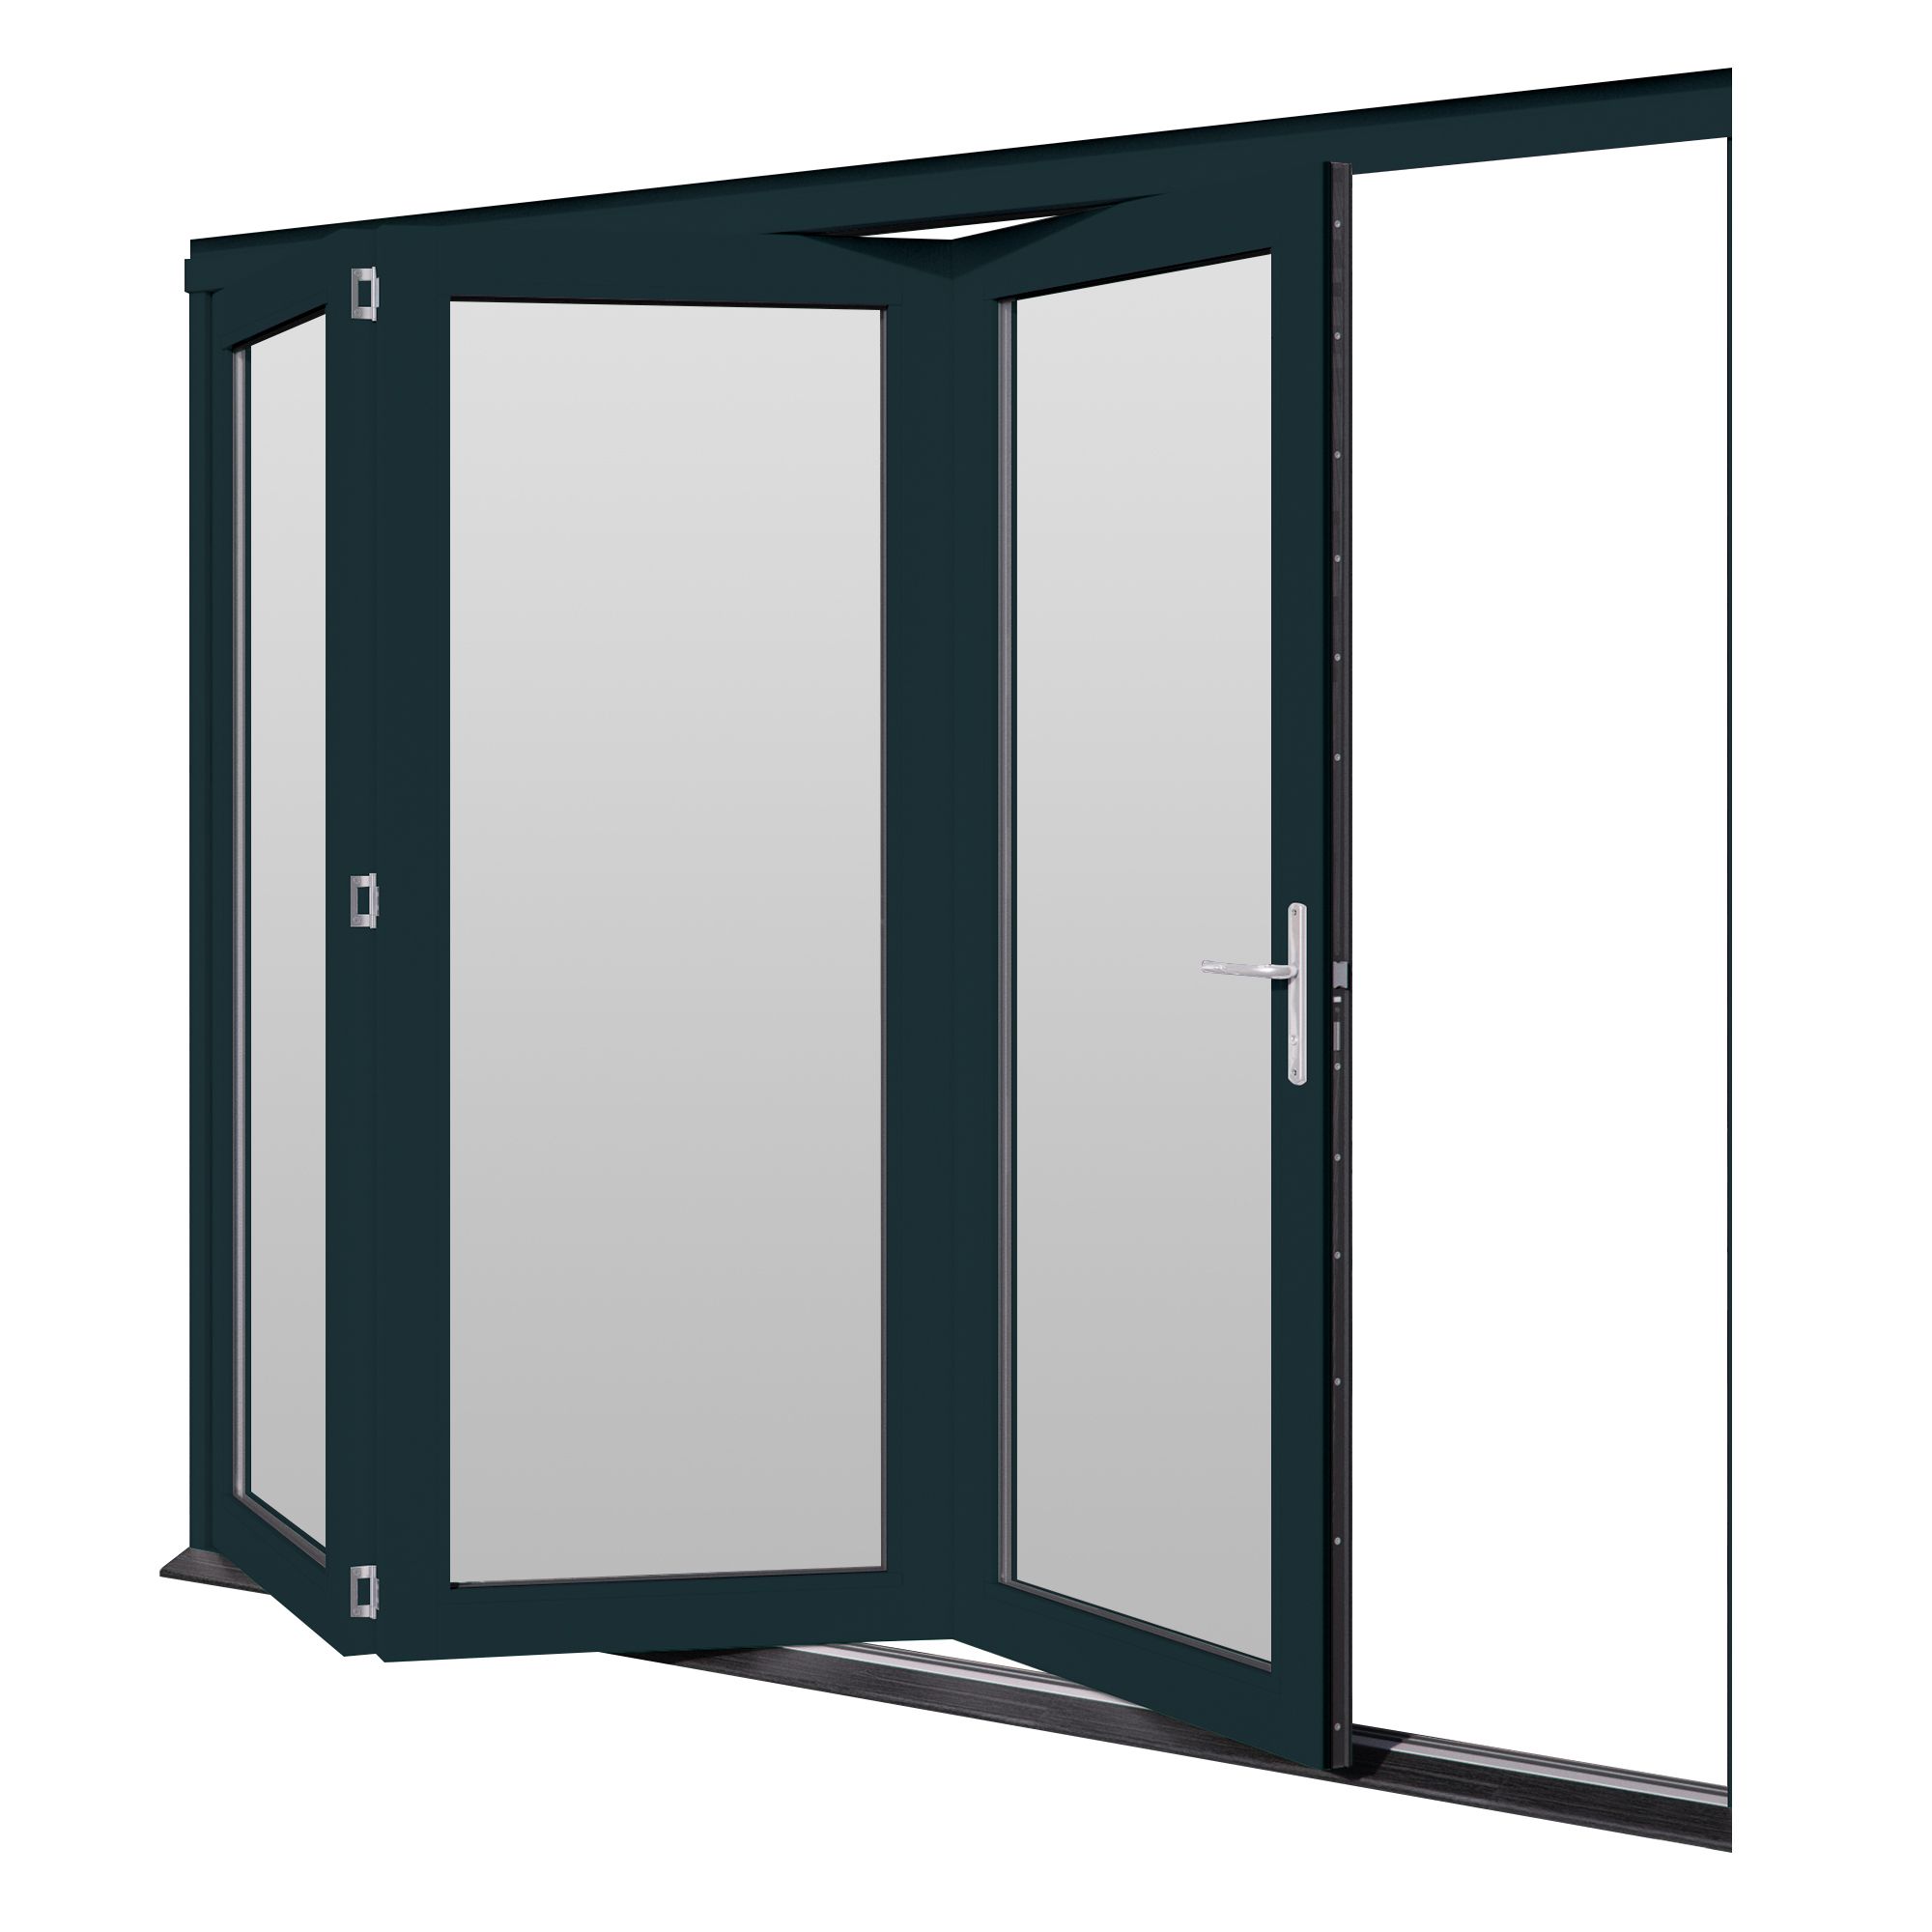 Jeld-Wen Clear Glazed Grey Hardwood External 3 Bedgebury Folding Patio door, (H)2094mm (W)1794mm